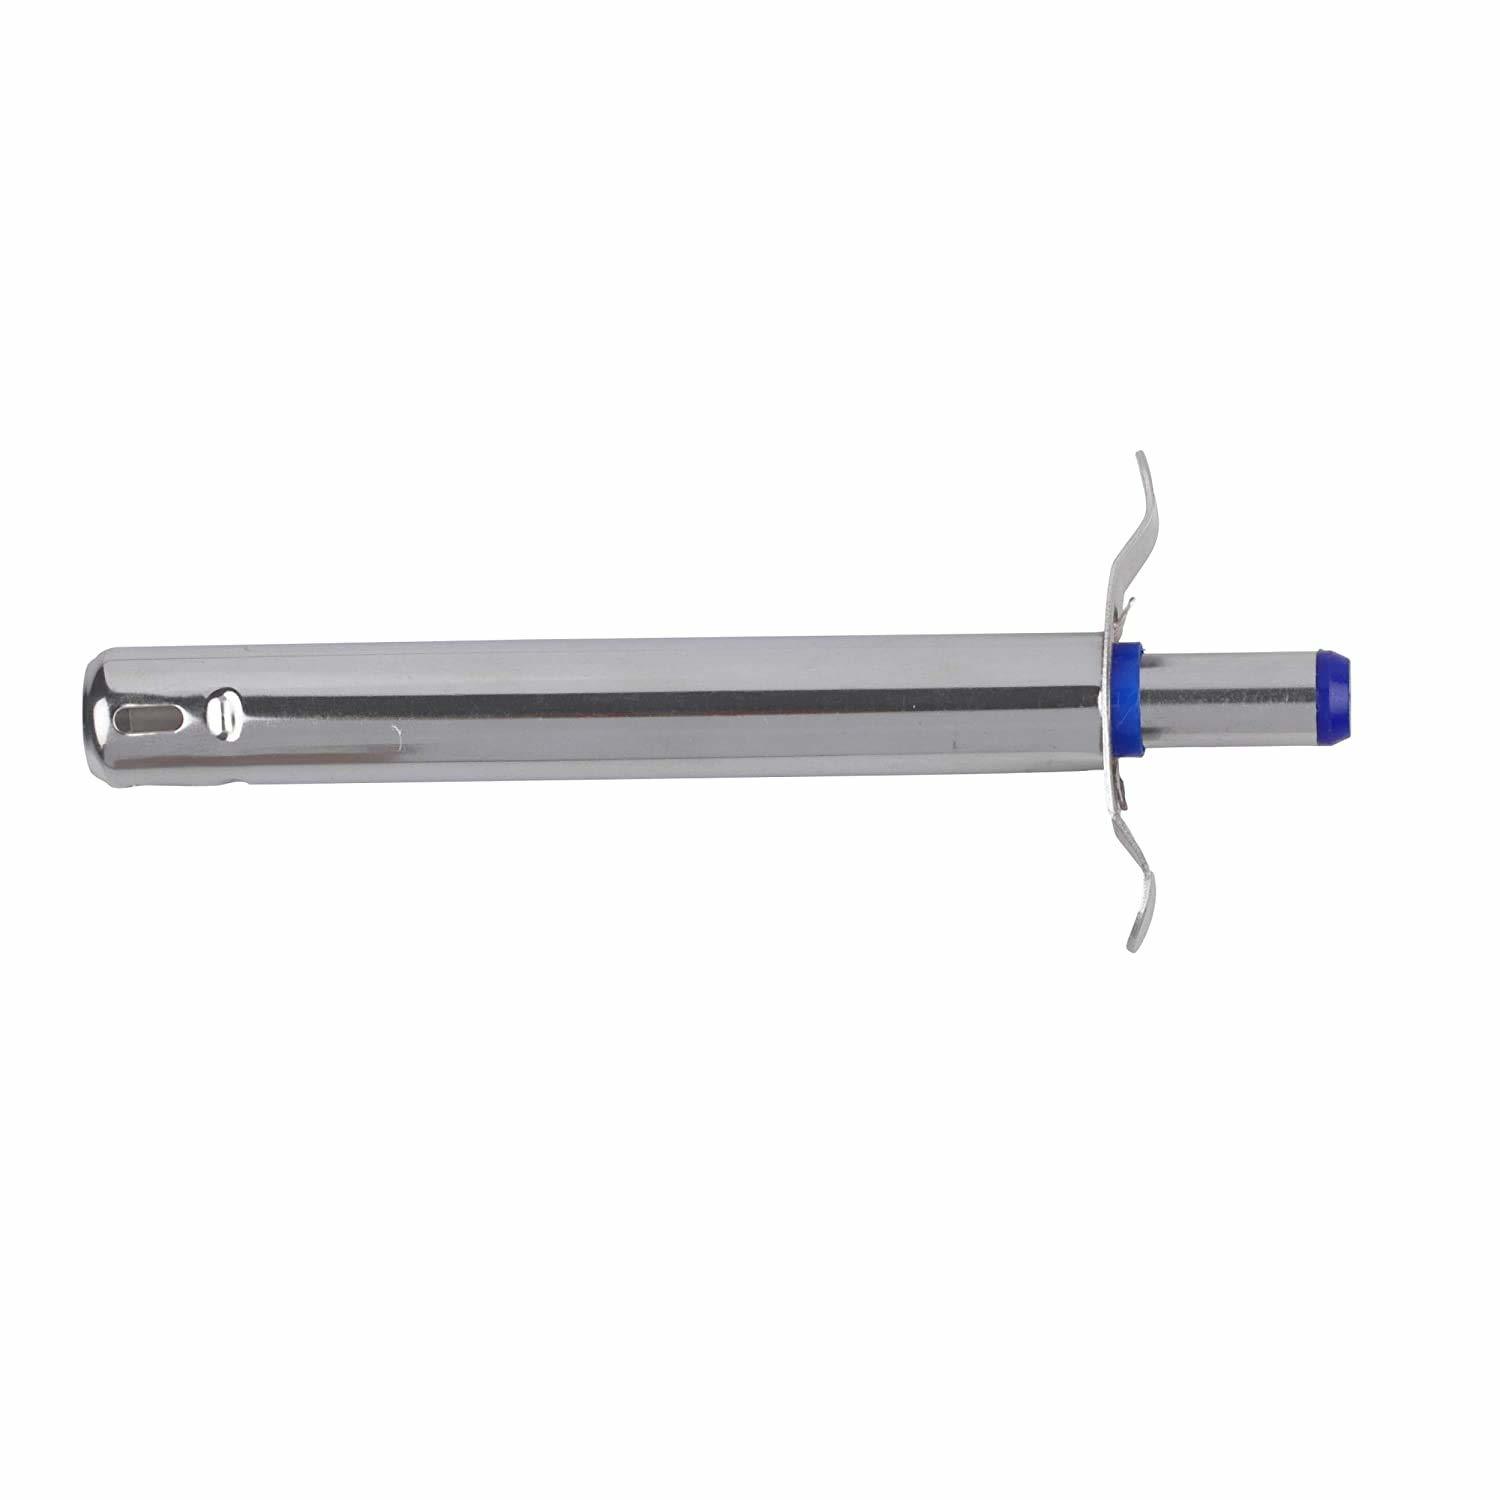 4in1-LIGHTER-COMBO Lighter-Combo Gas Lighter 4 in 1 Combo Gas Lighter, Vegetable Knife, Peeler, Grater Stainless Steel Combo (Multi Color) Silver,Blue Kitchen Tool Set